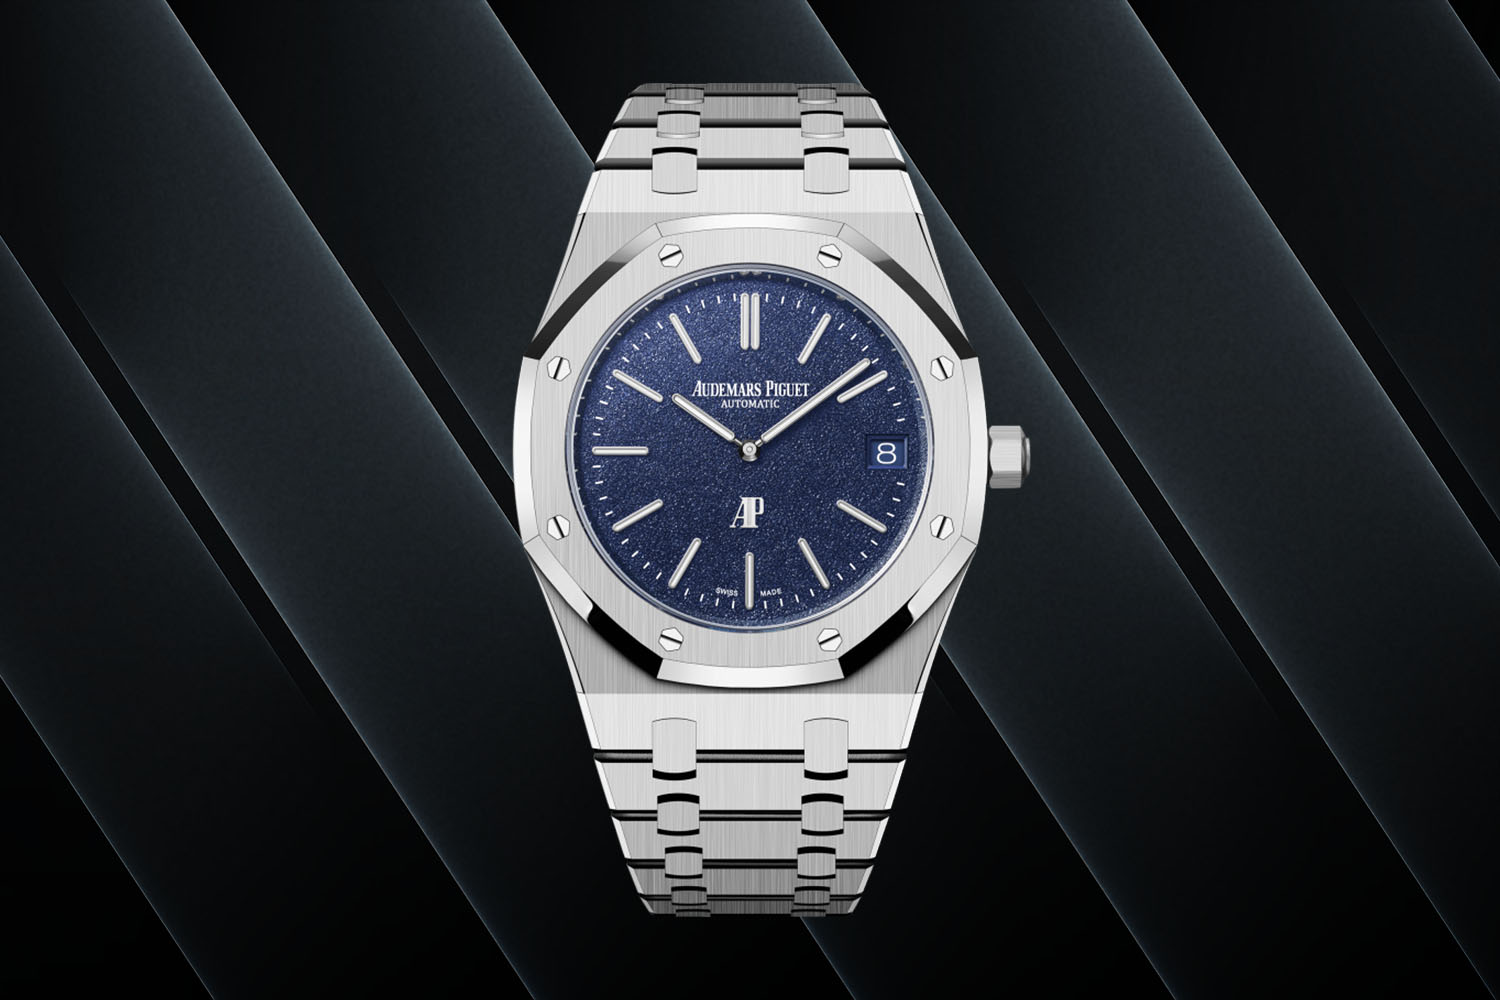 Audemars Piguet Royal Oak Jumbo Ultra-Thin, one of the best luxury sports watches